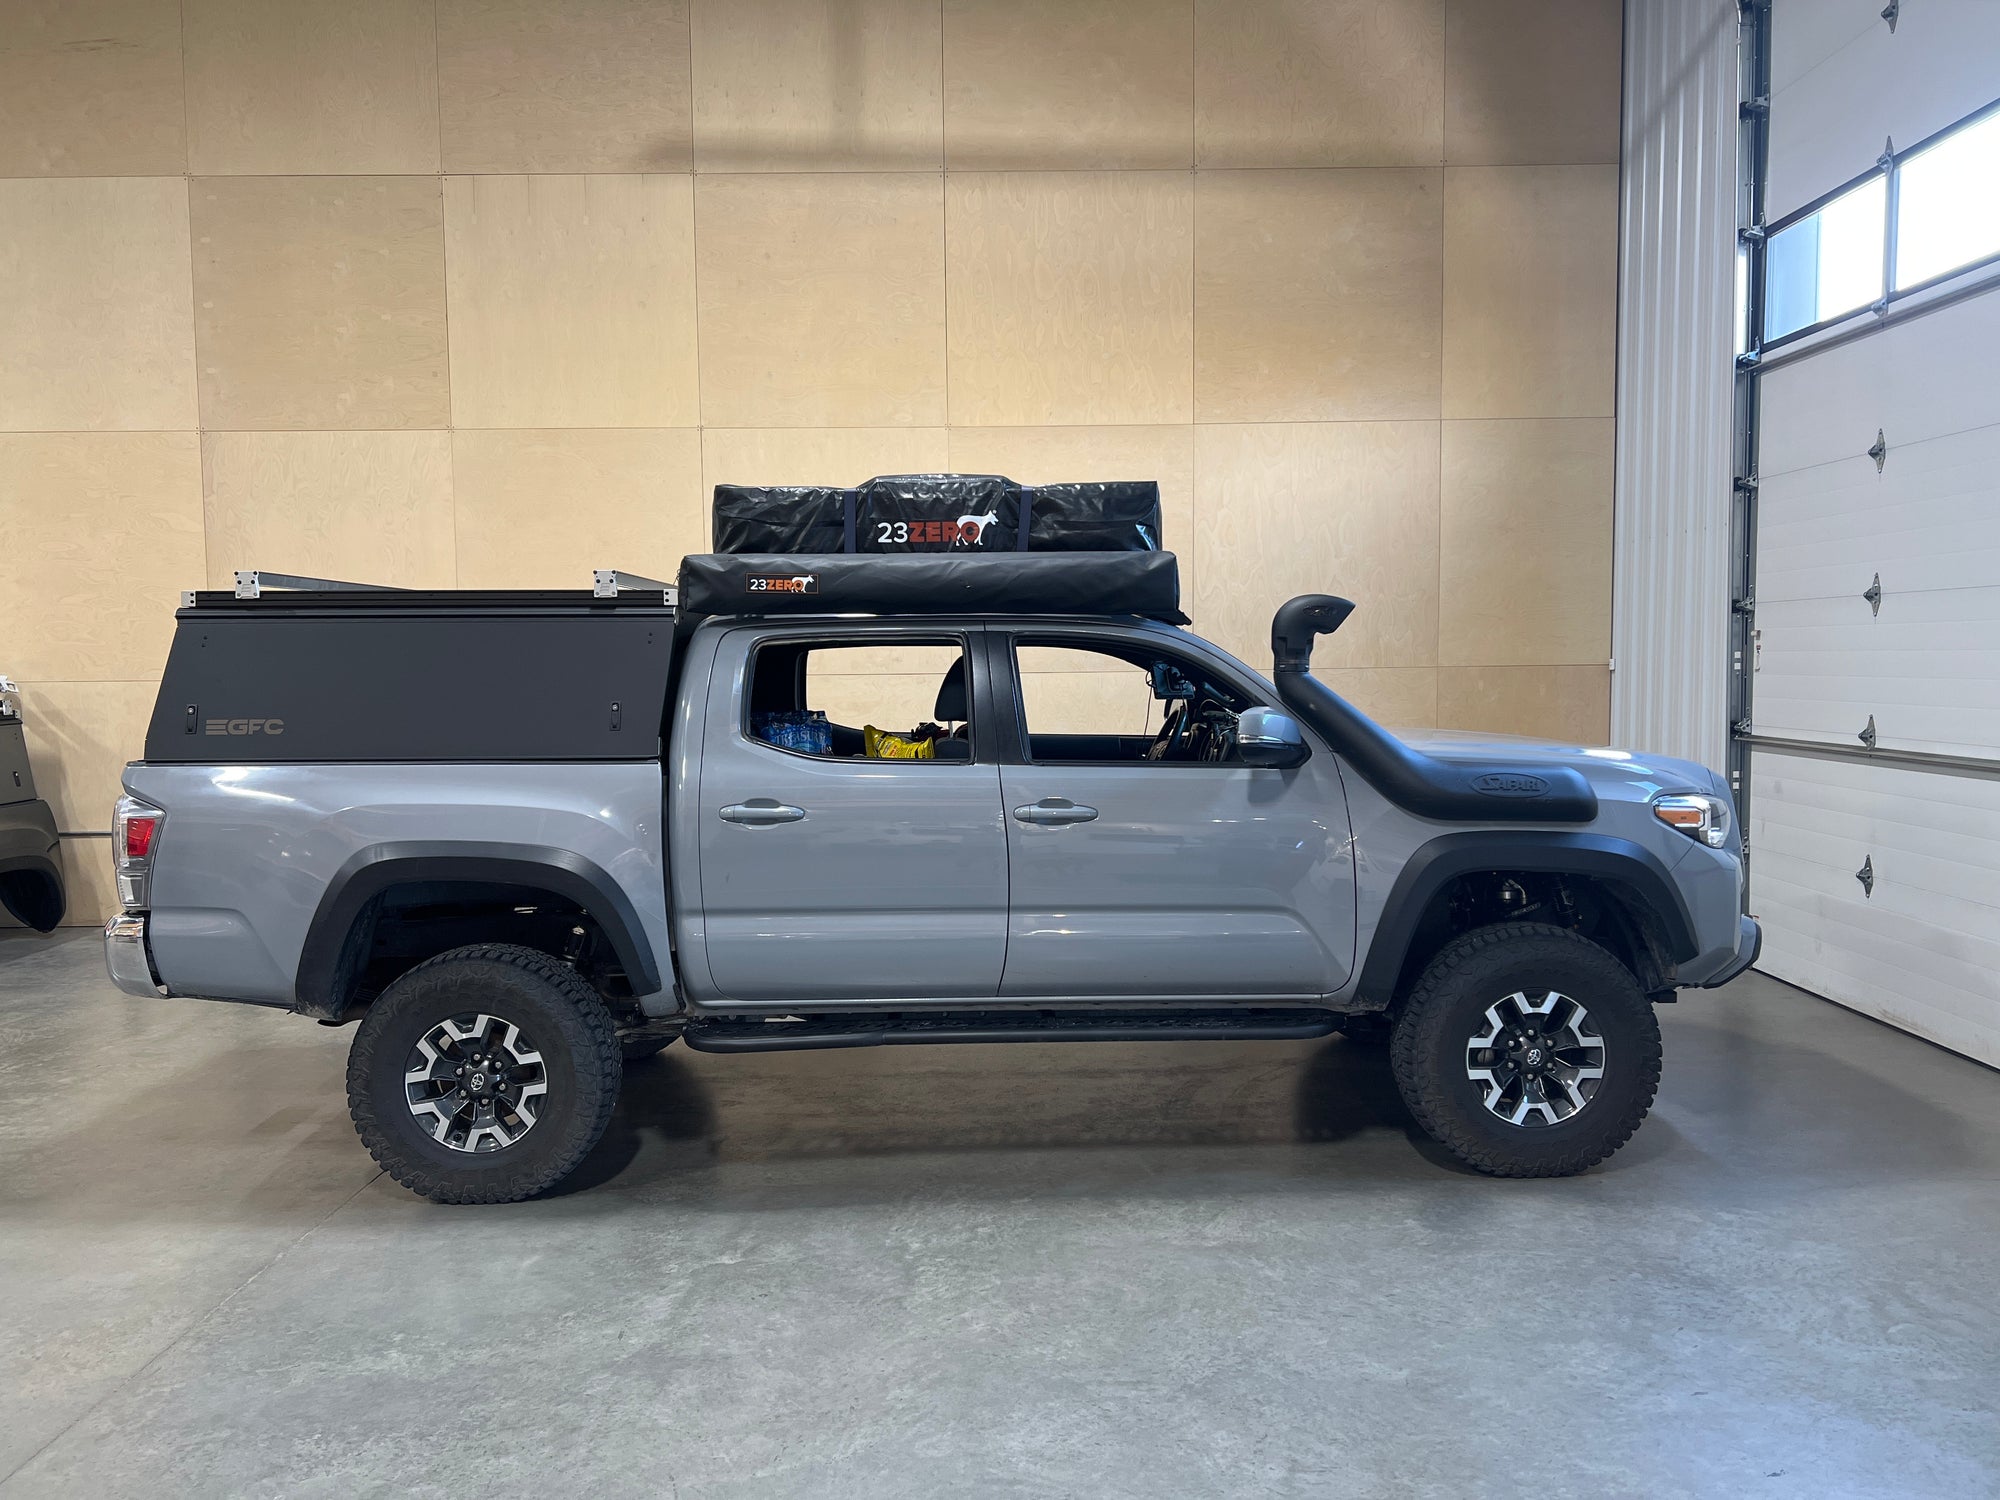 2021 Toyota Tacoma Topper - Build #314